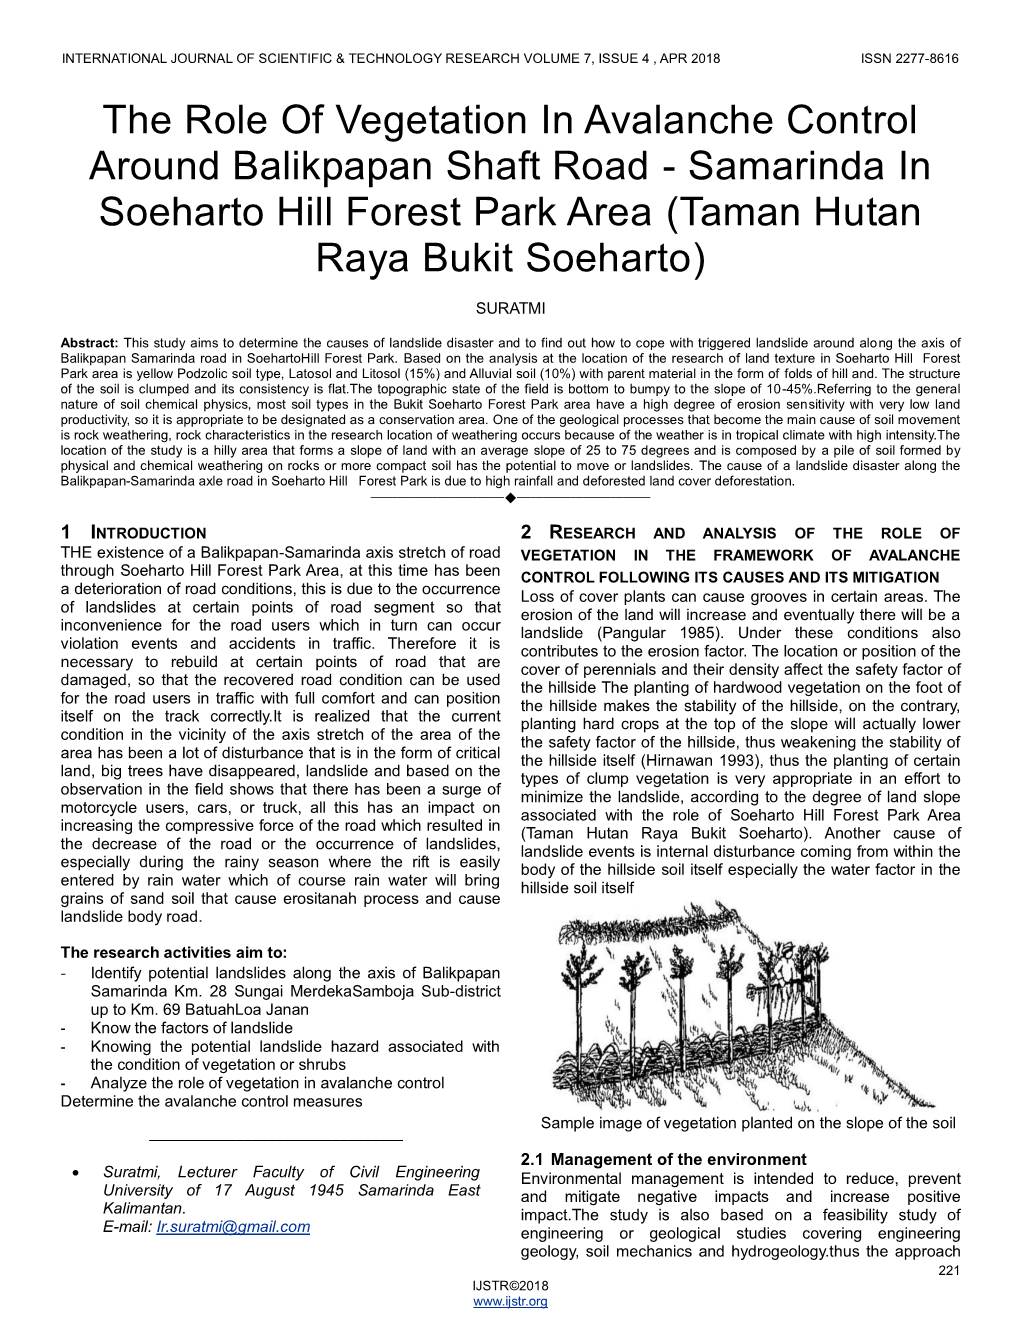 The Role of Vegetation in Avalanche Control Around Balikpapan Shaft Road - Samarinda in Soeharto Hill Forest Park Area (Taman Hutan Raya Bukit Soeharto)